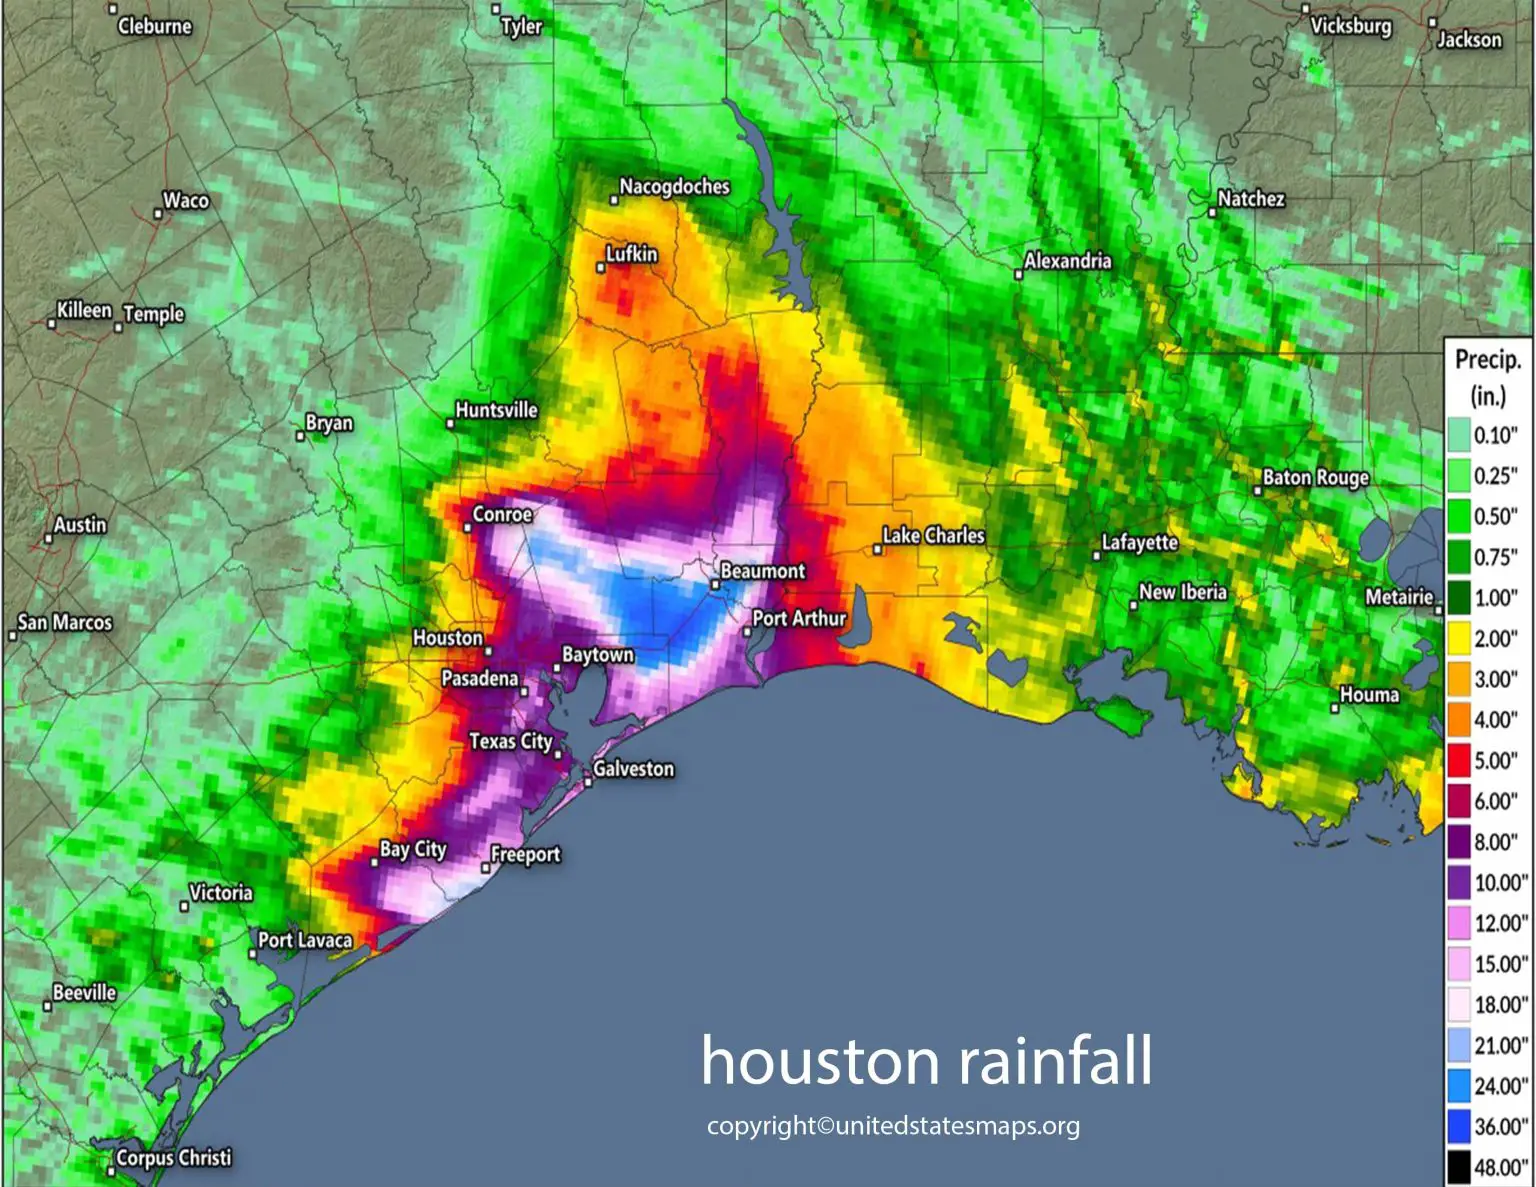 Houston Rainfall Map Rainfall Map of Houston